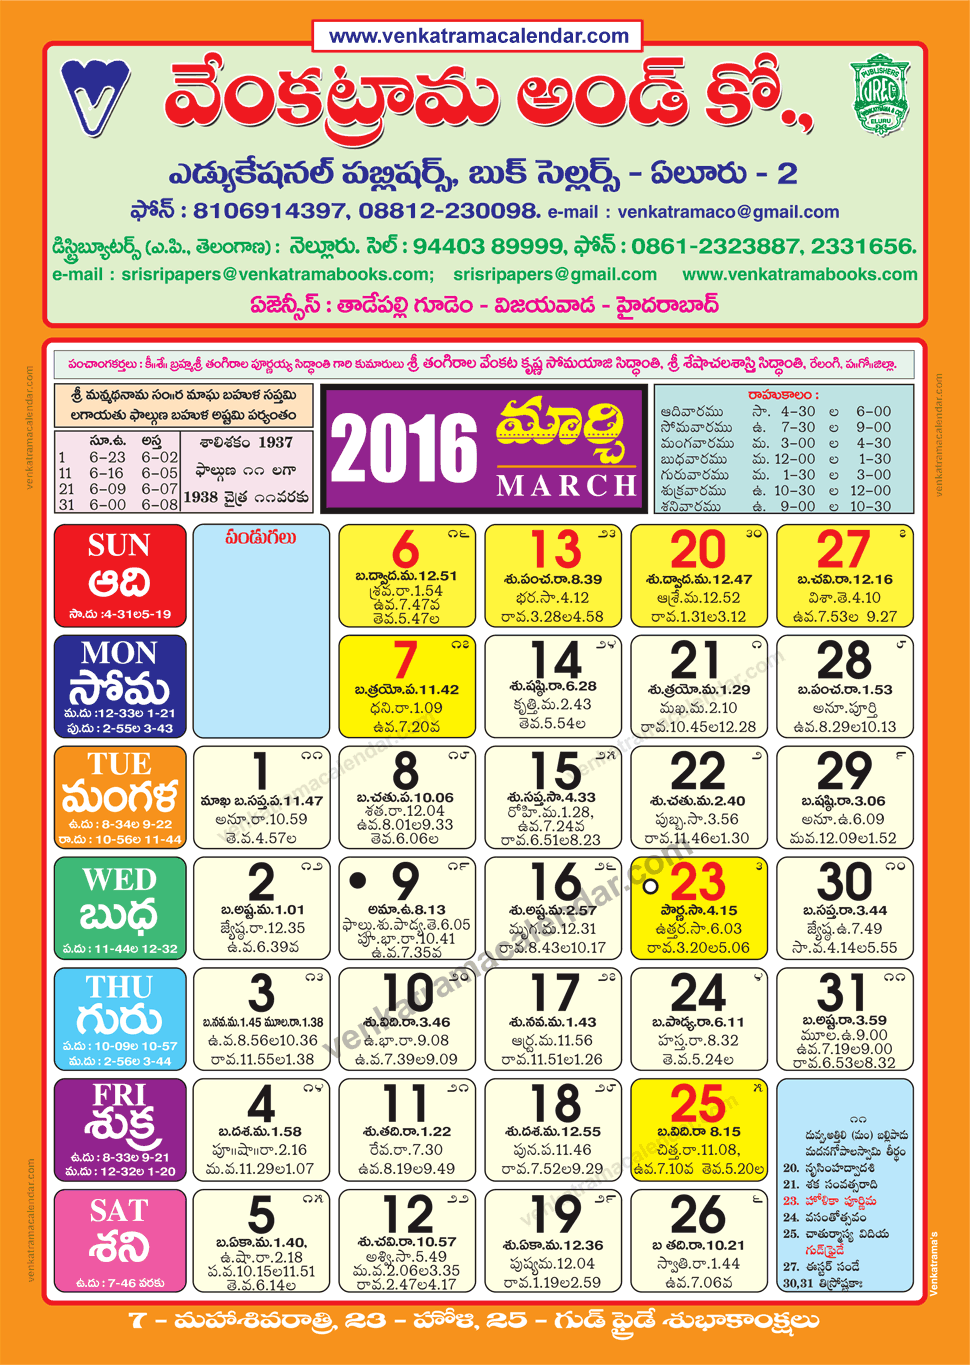 march-2016-venkatrama-co-multi-colour-telugu-calendar-2016-festivals-holidays